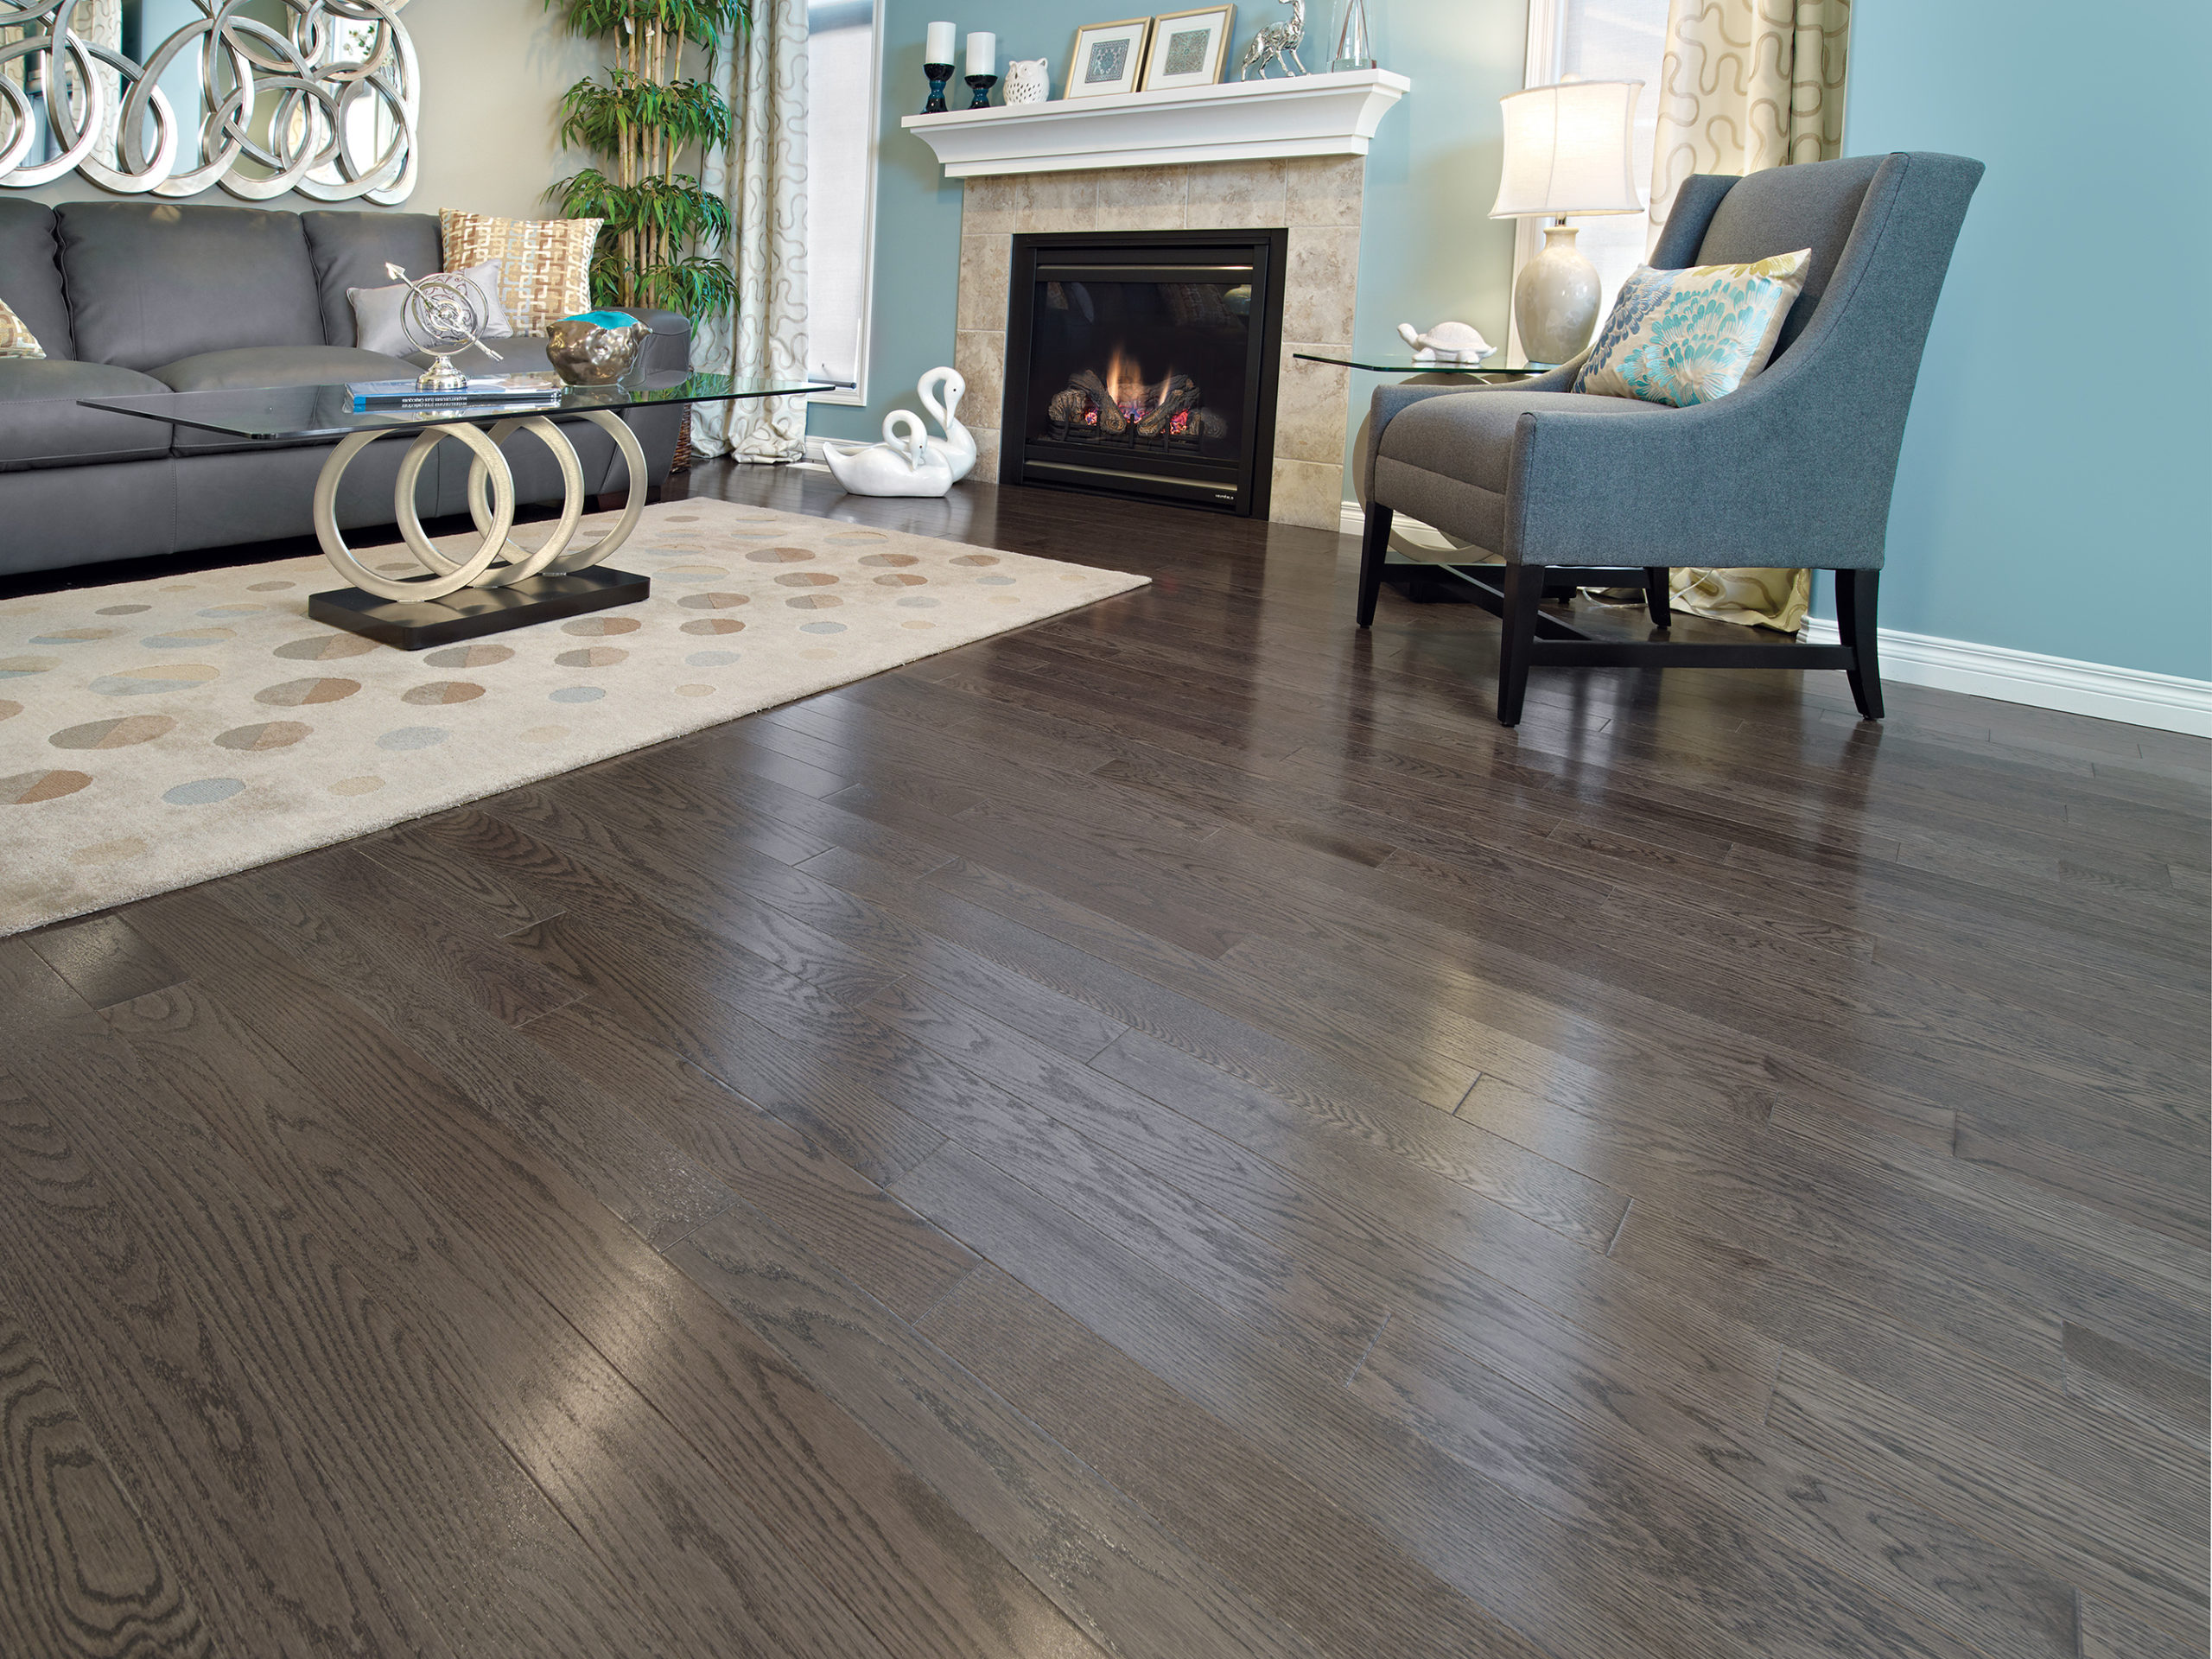 Red Oak Charcoal Mirage Hardwood Floors, Mirage Engineered Hardwood Flooring Reviews